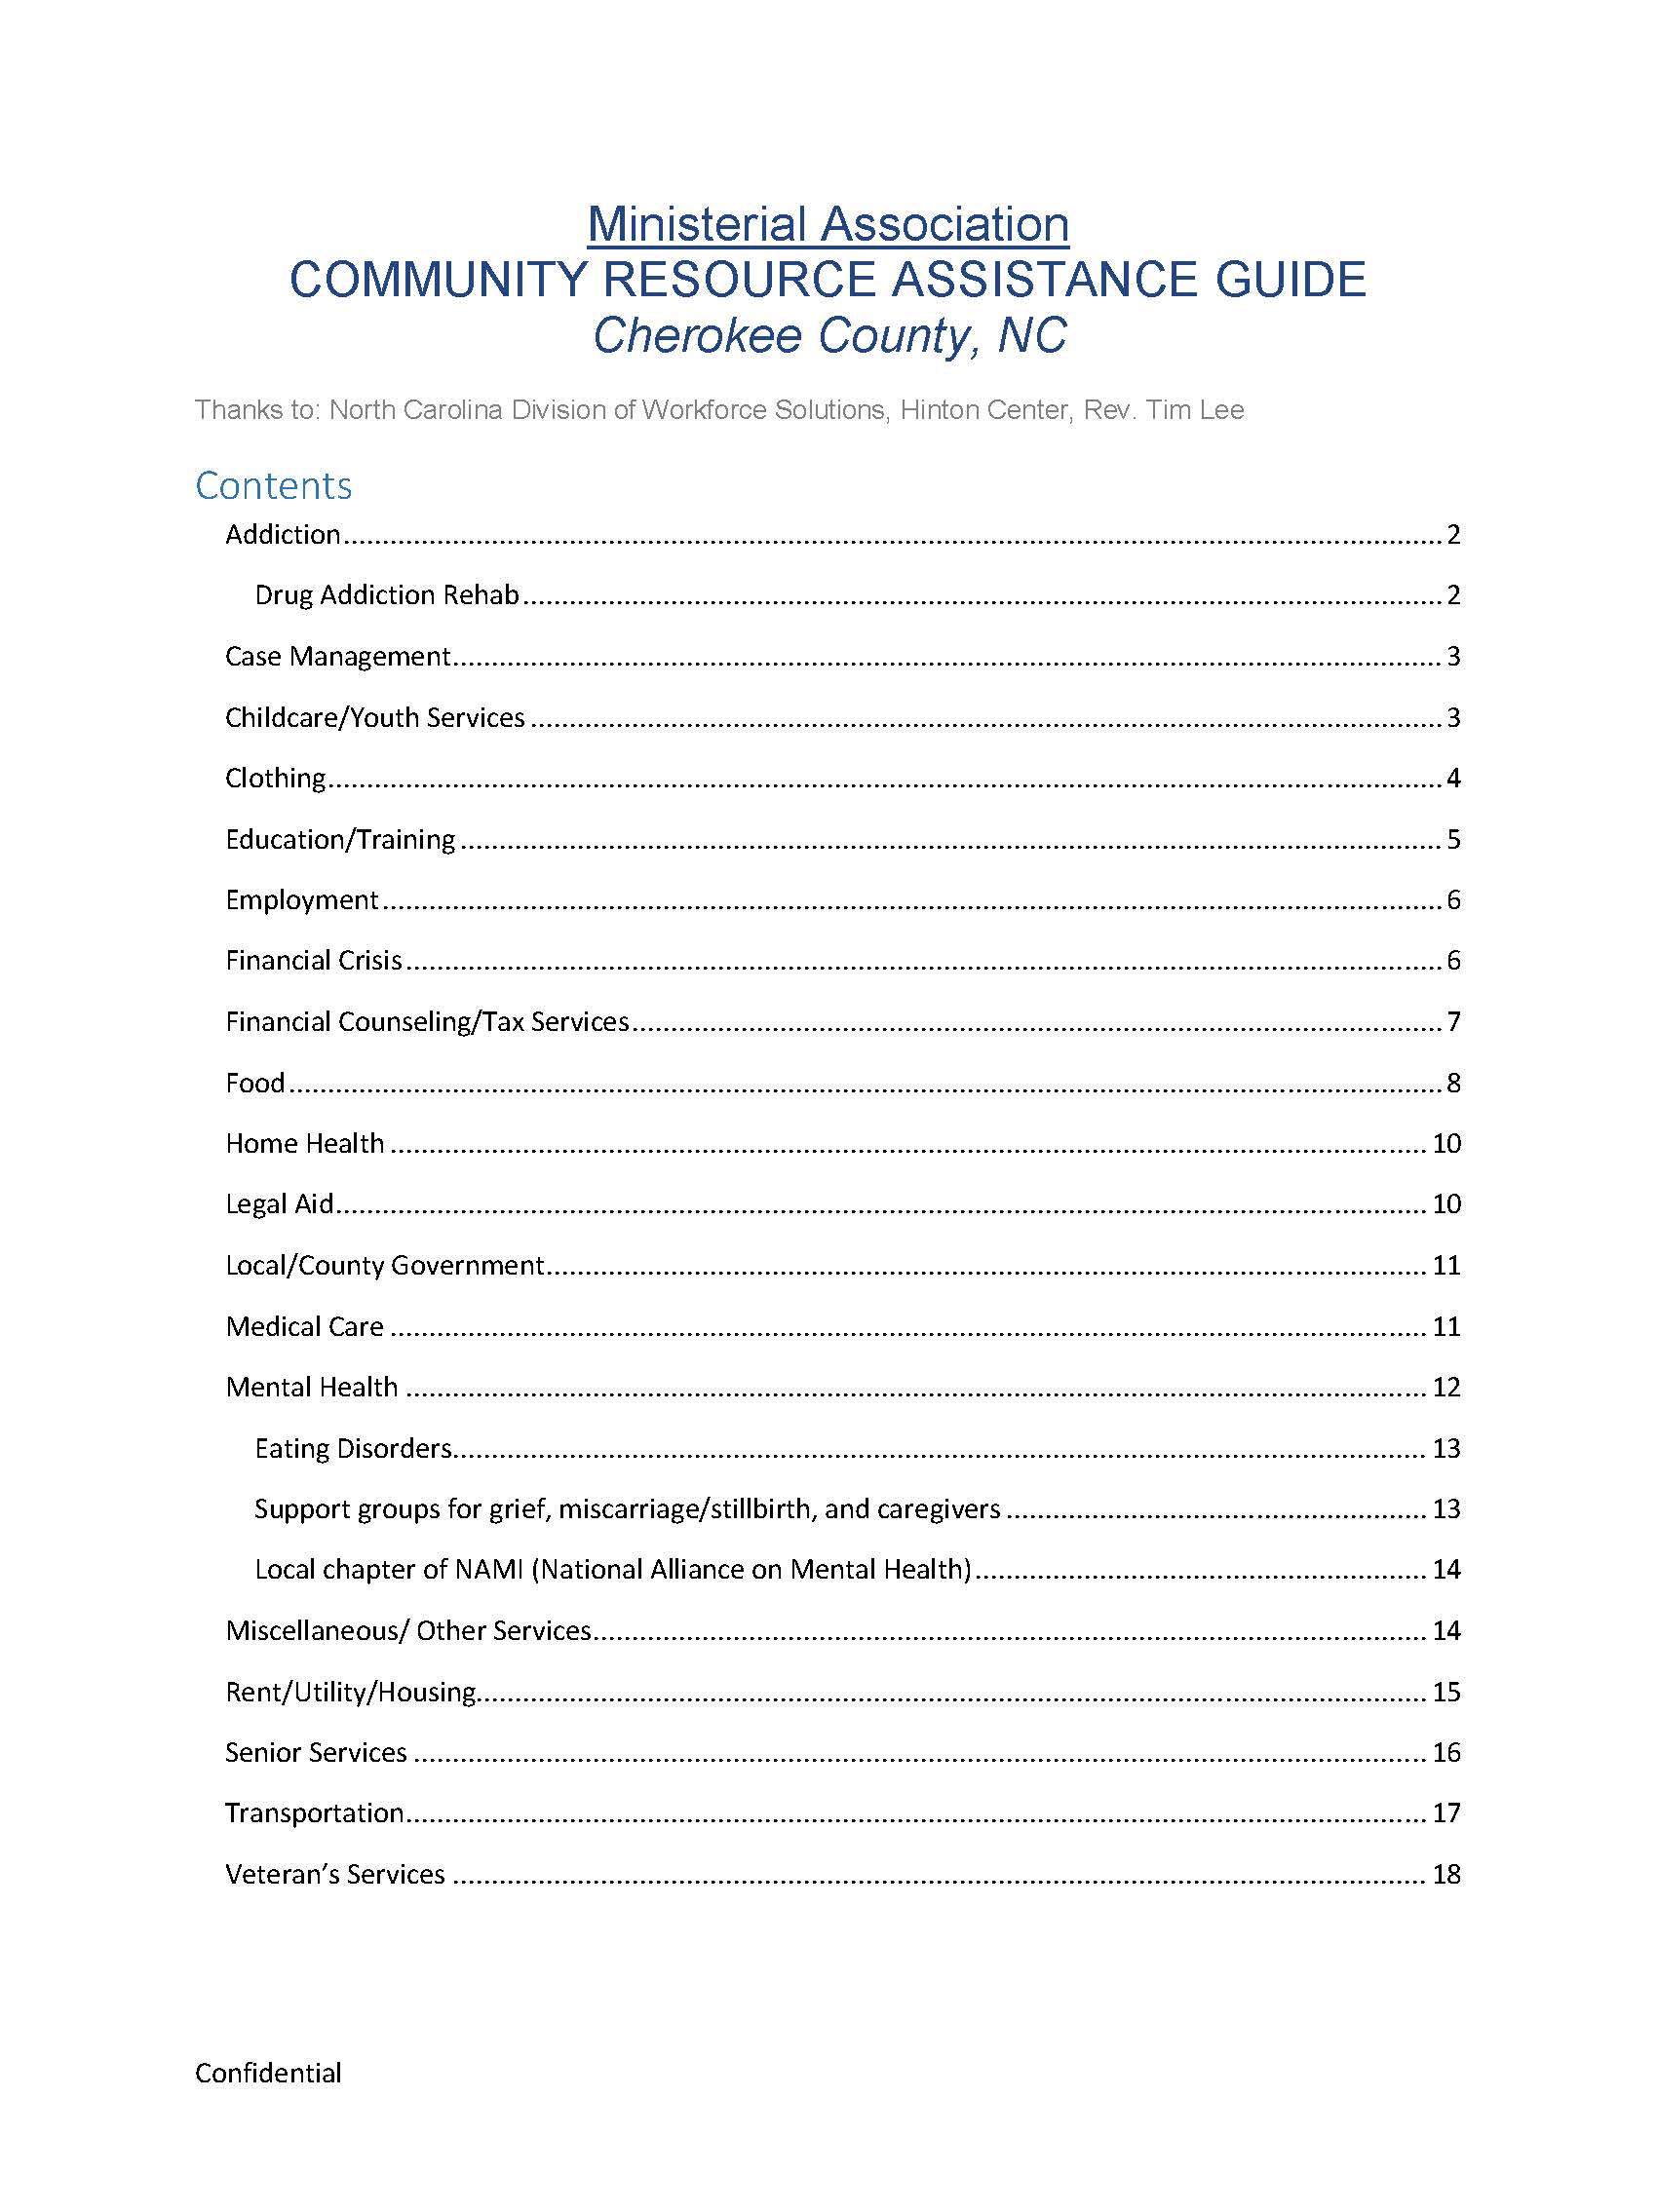 Cherokee County Community Resource